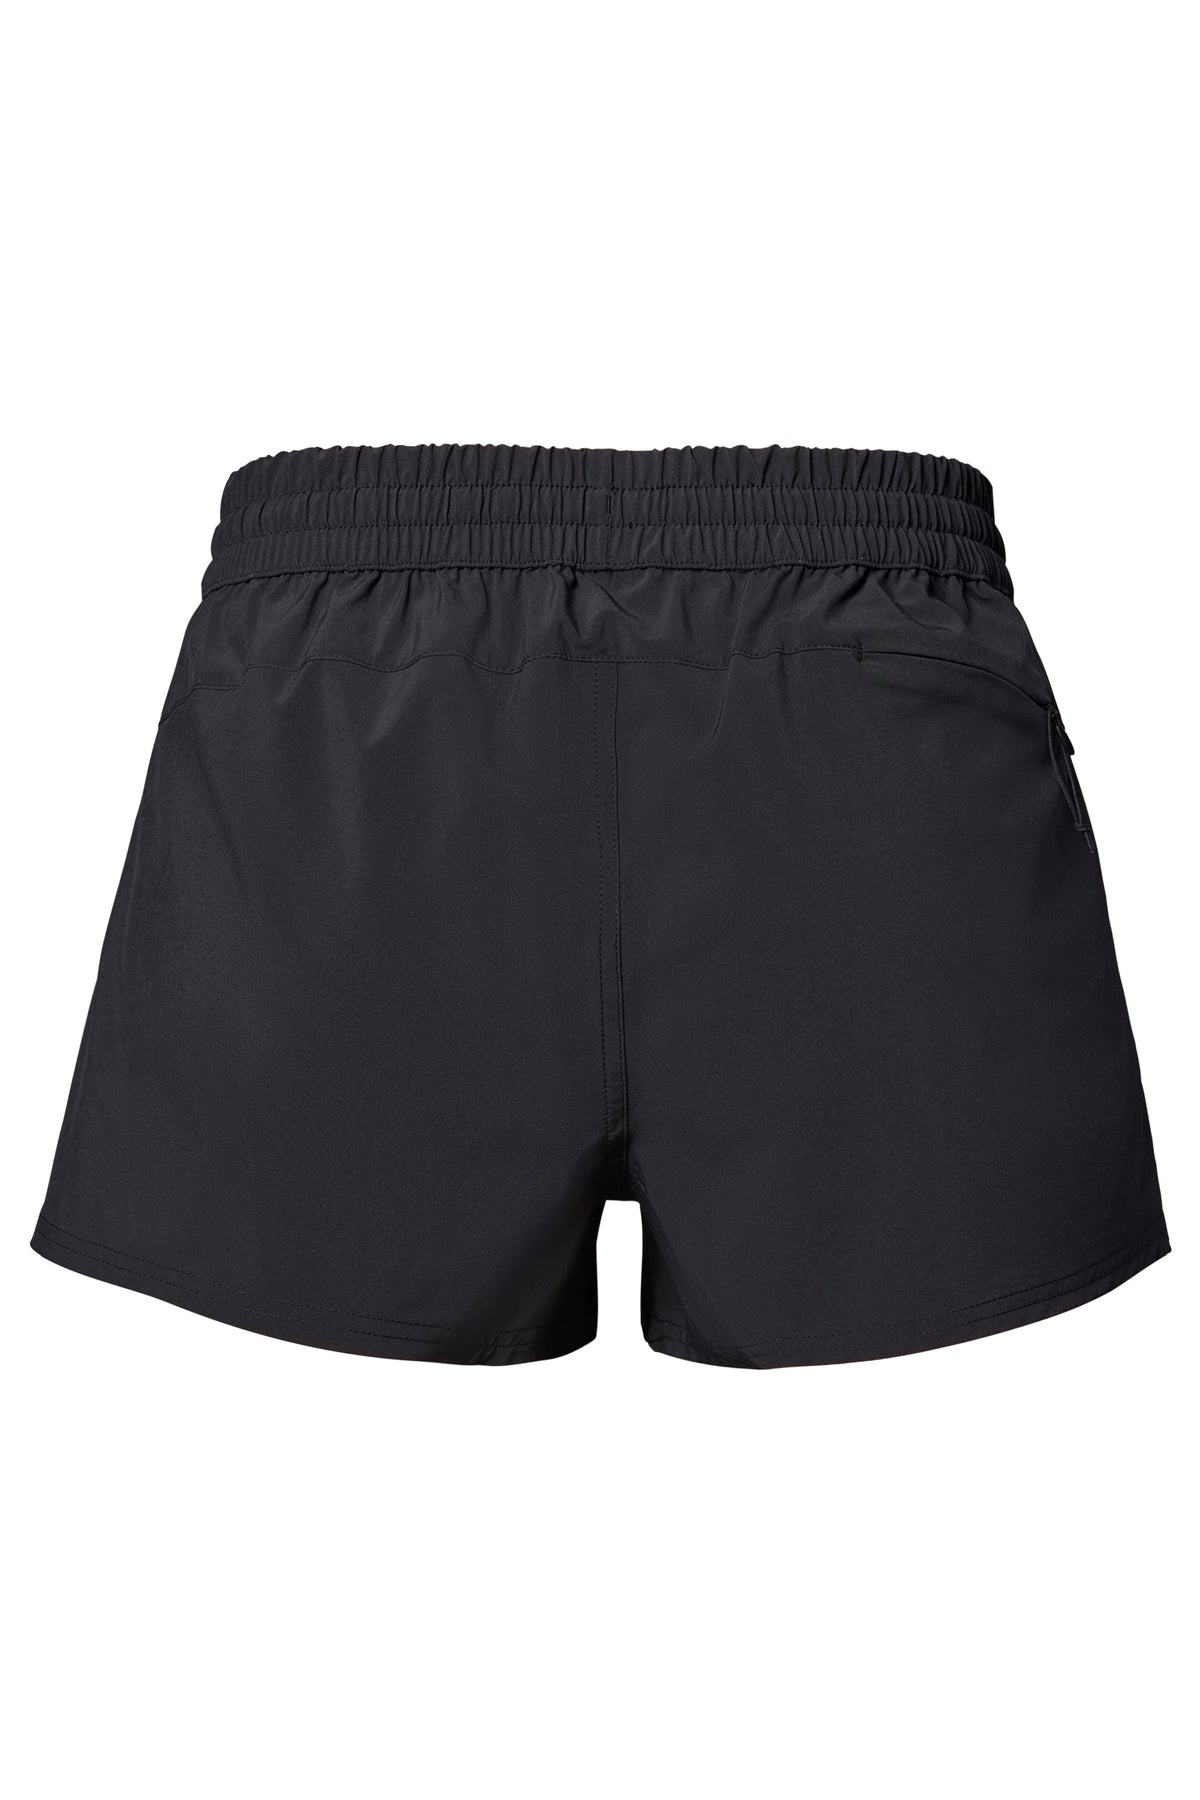 UNDER ARMOR WOMENS Shorts Sz XS Grey Pockets Athletic Short NEW